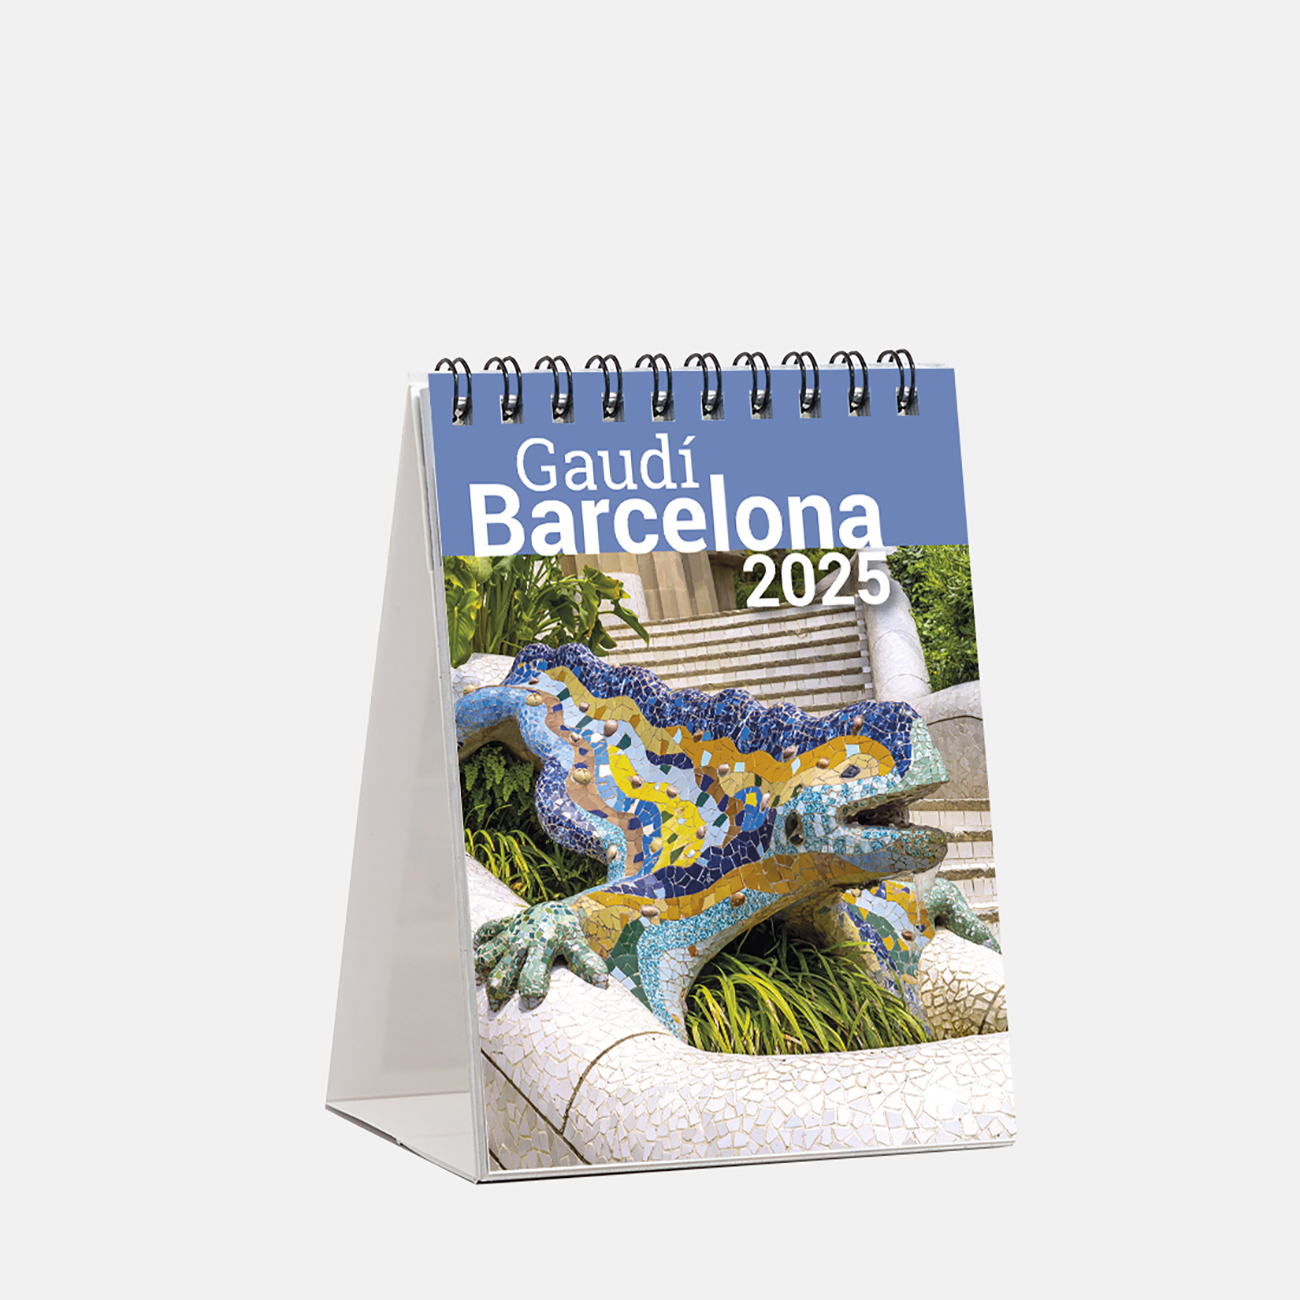 Calendar 2025 Gaudí sm25g1 calendario mini 2025 gaudi